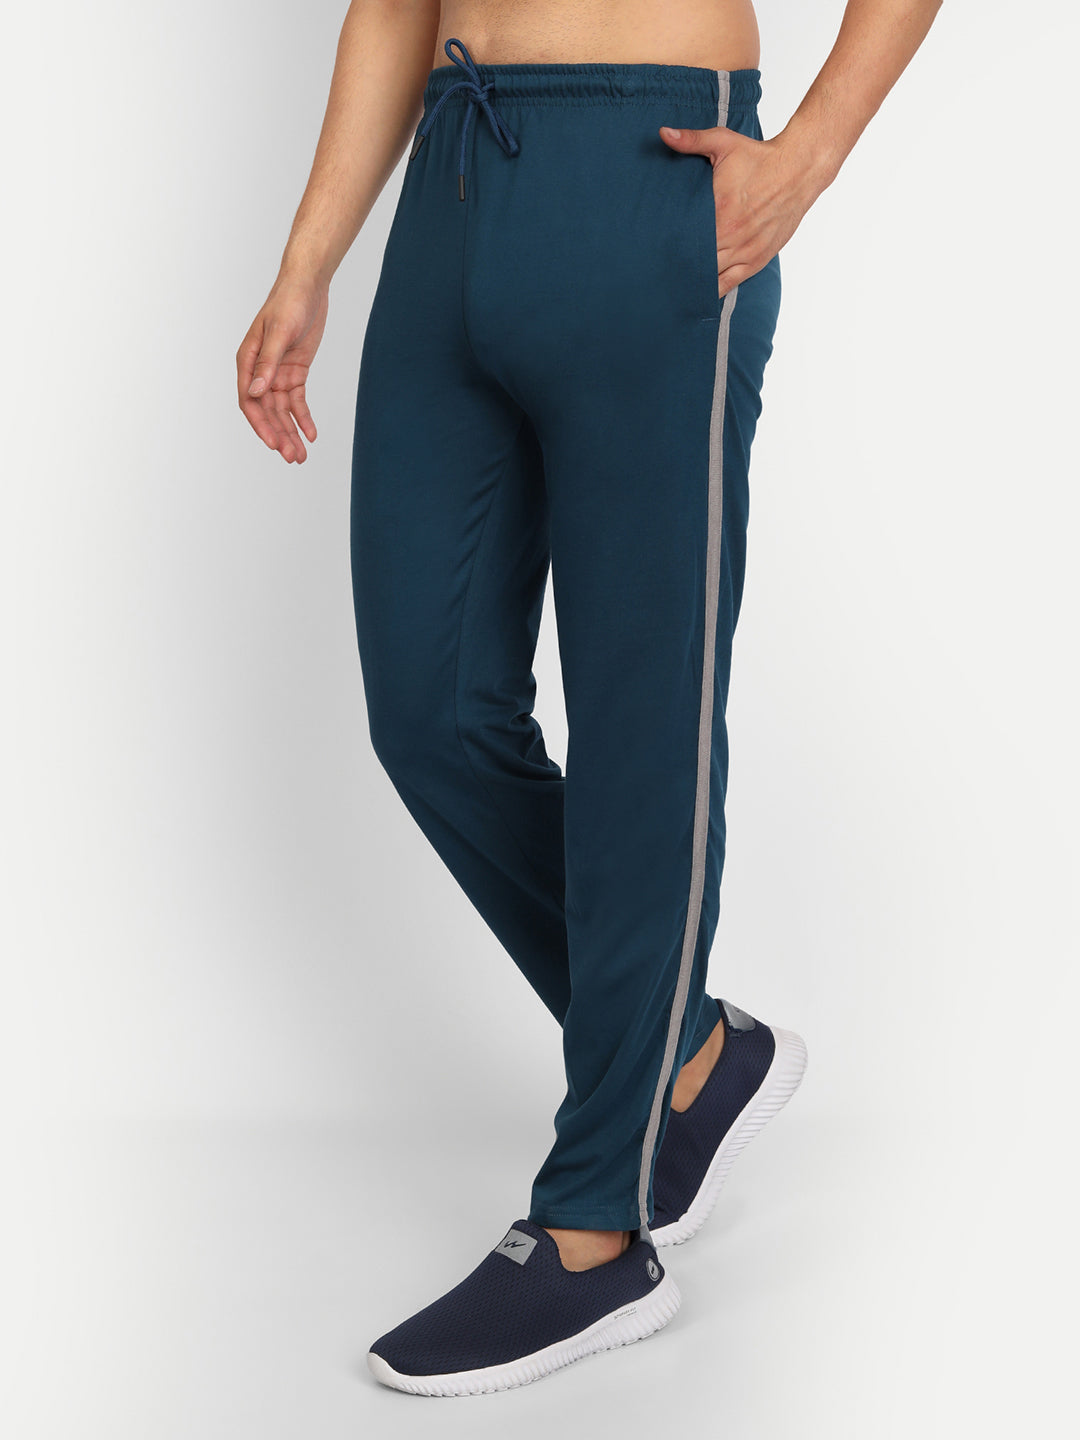 Pack of 2 Men's Cotton Track Pants (Black & Blue) – Shopperfab